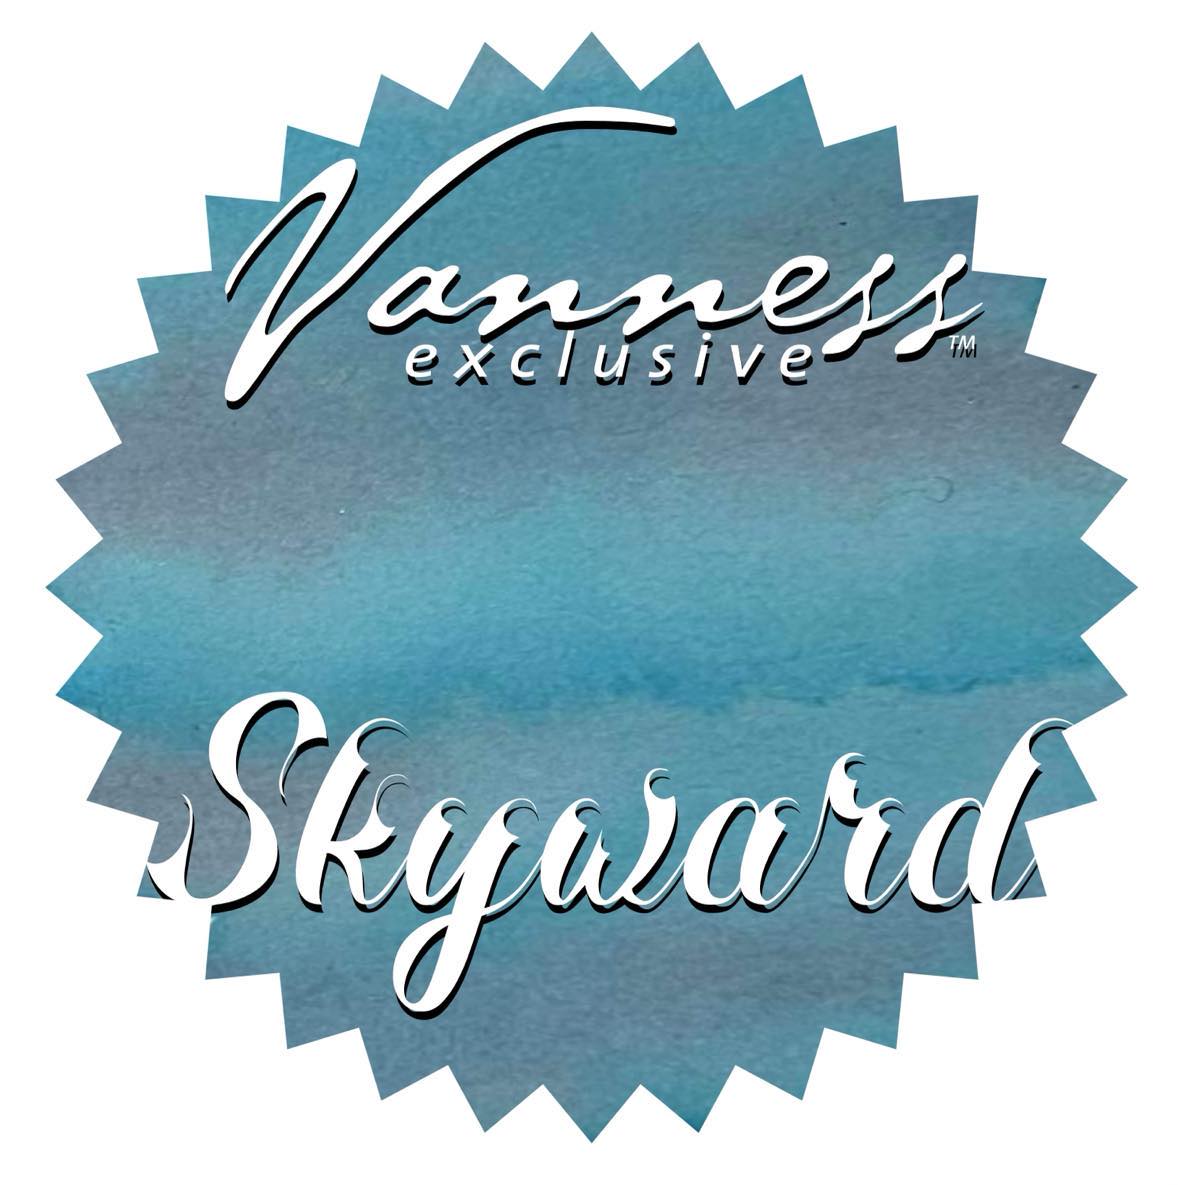 Robert Oster Vanness Exclusive Skyward